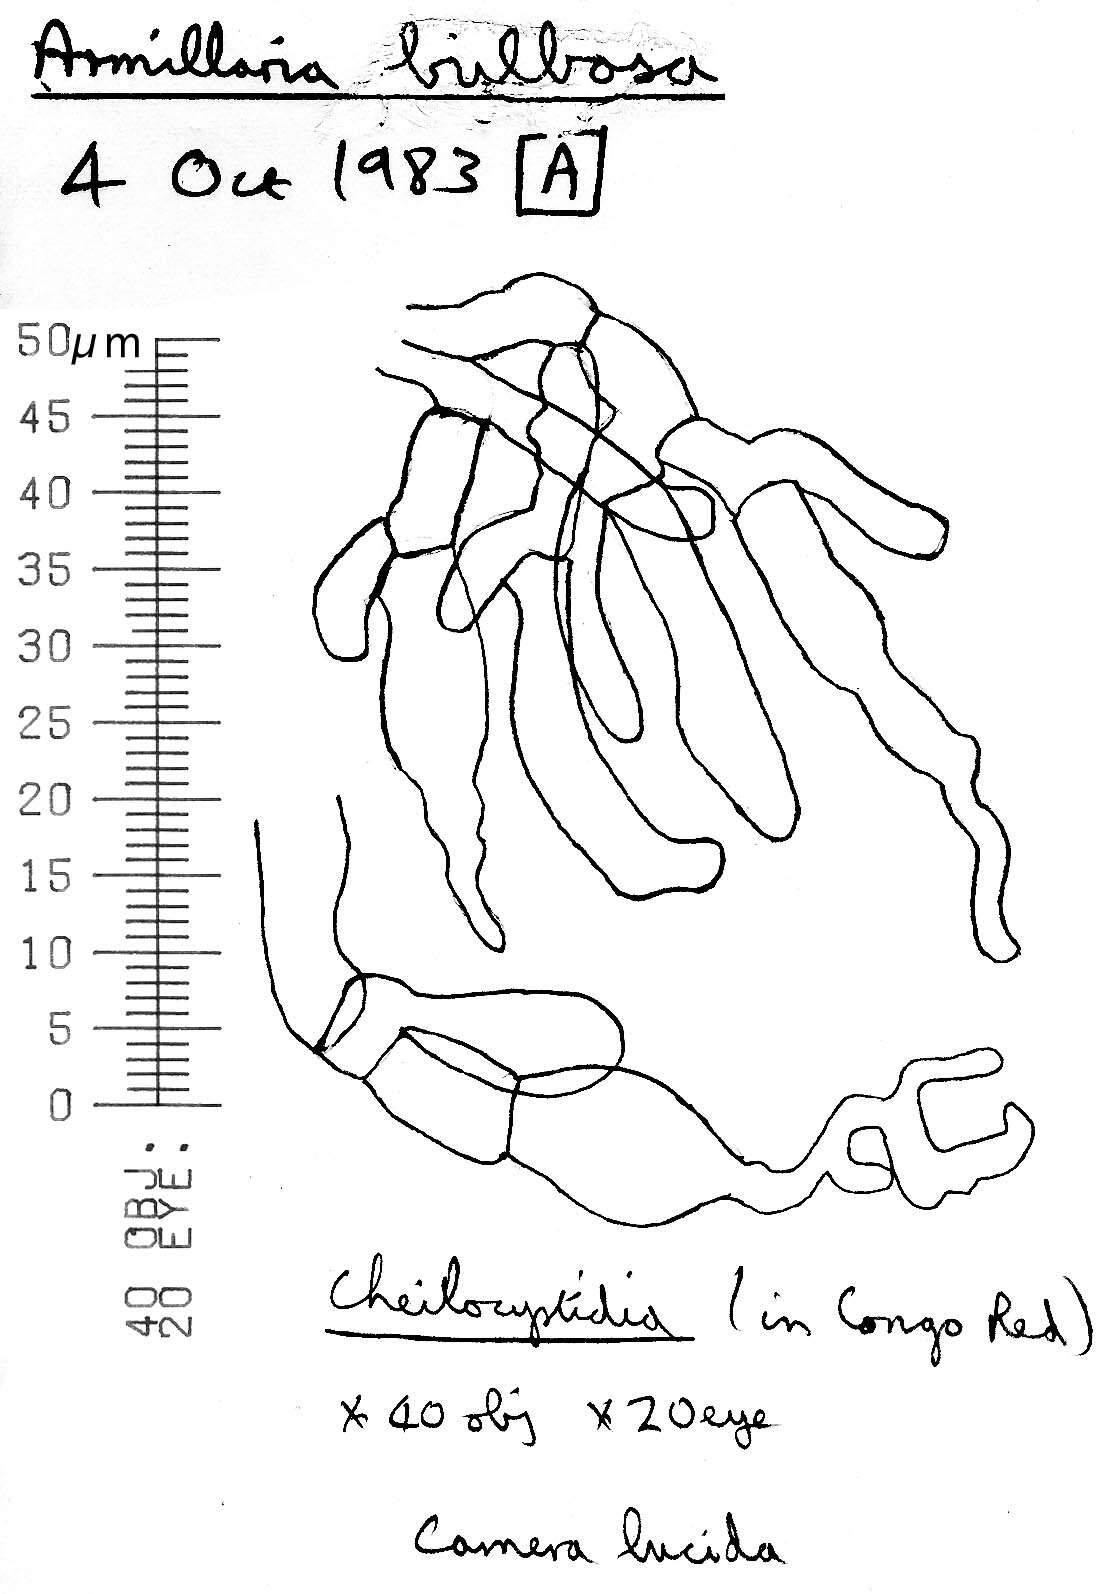 Image of Armillaria ostoyae (Romagn.) Herink 1973